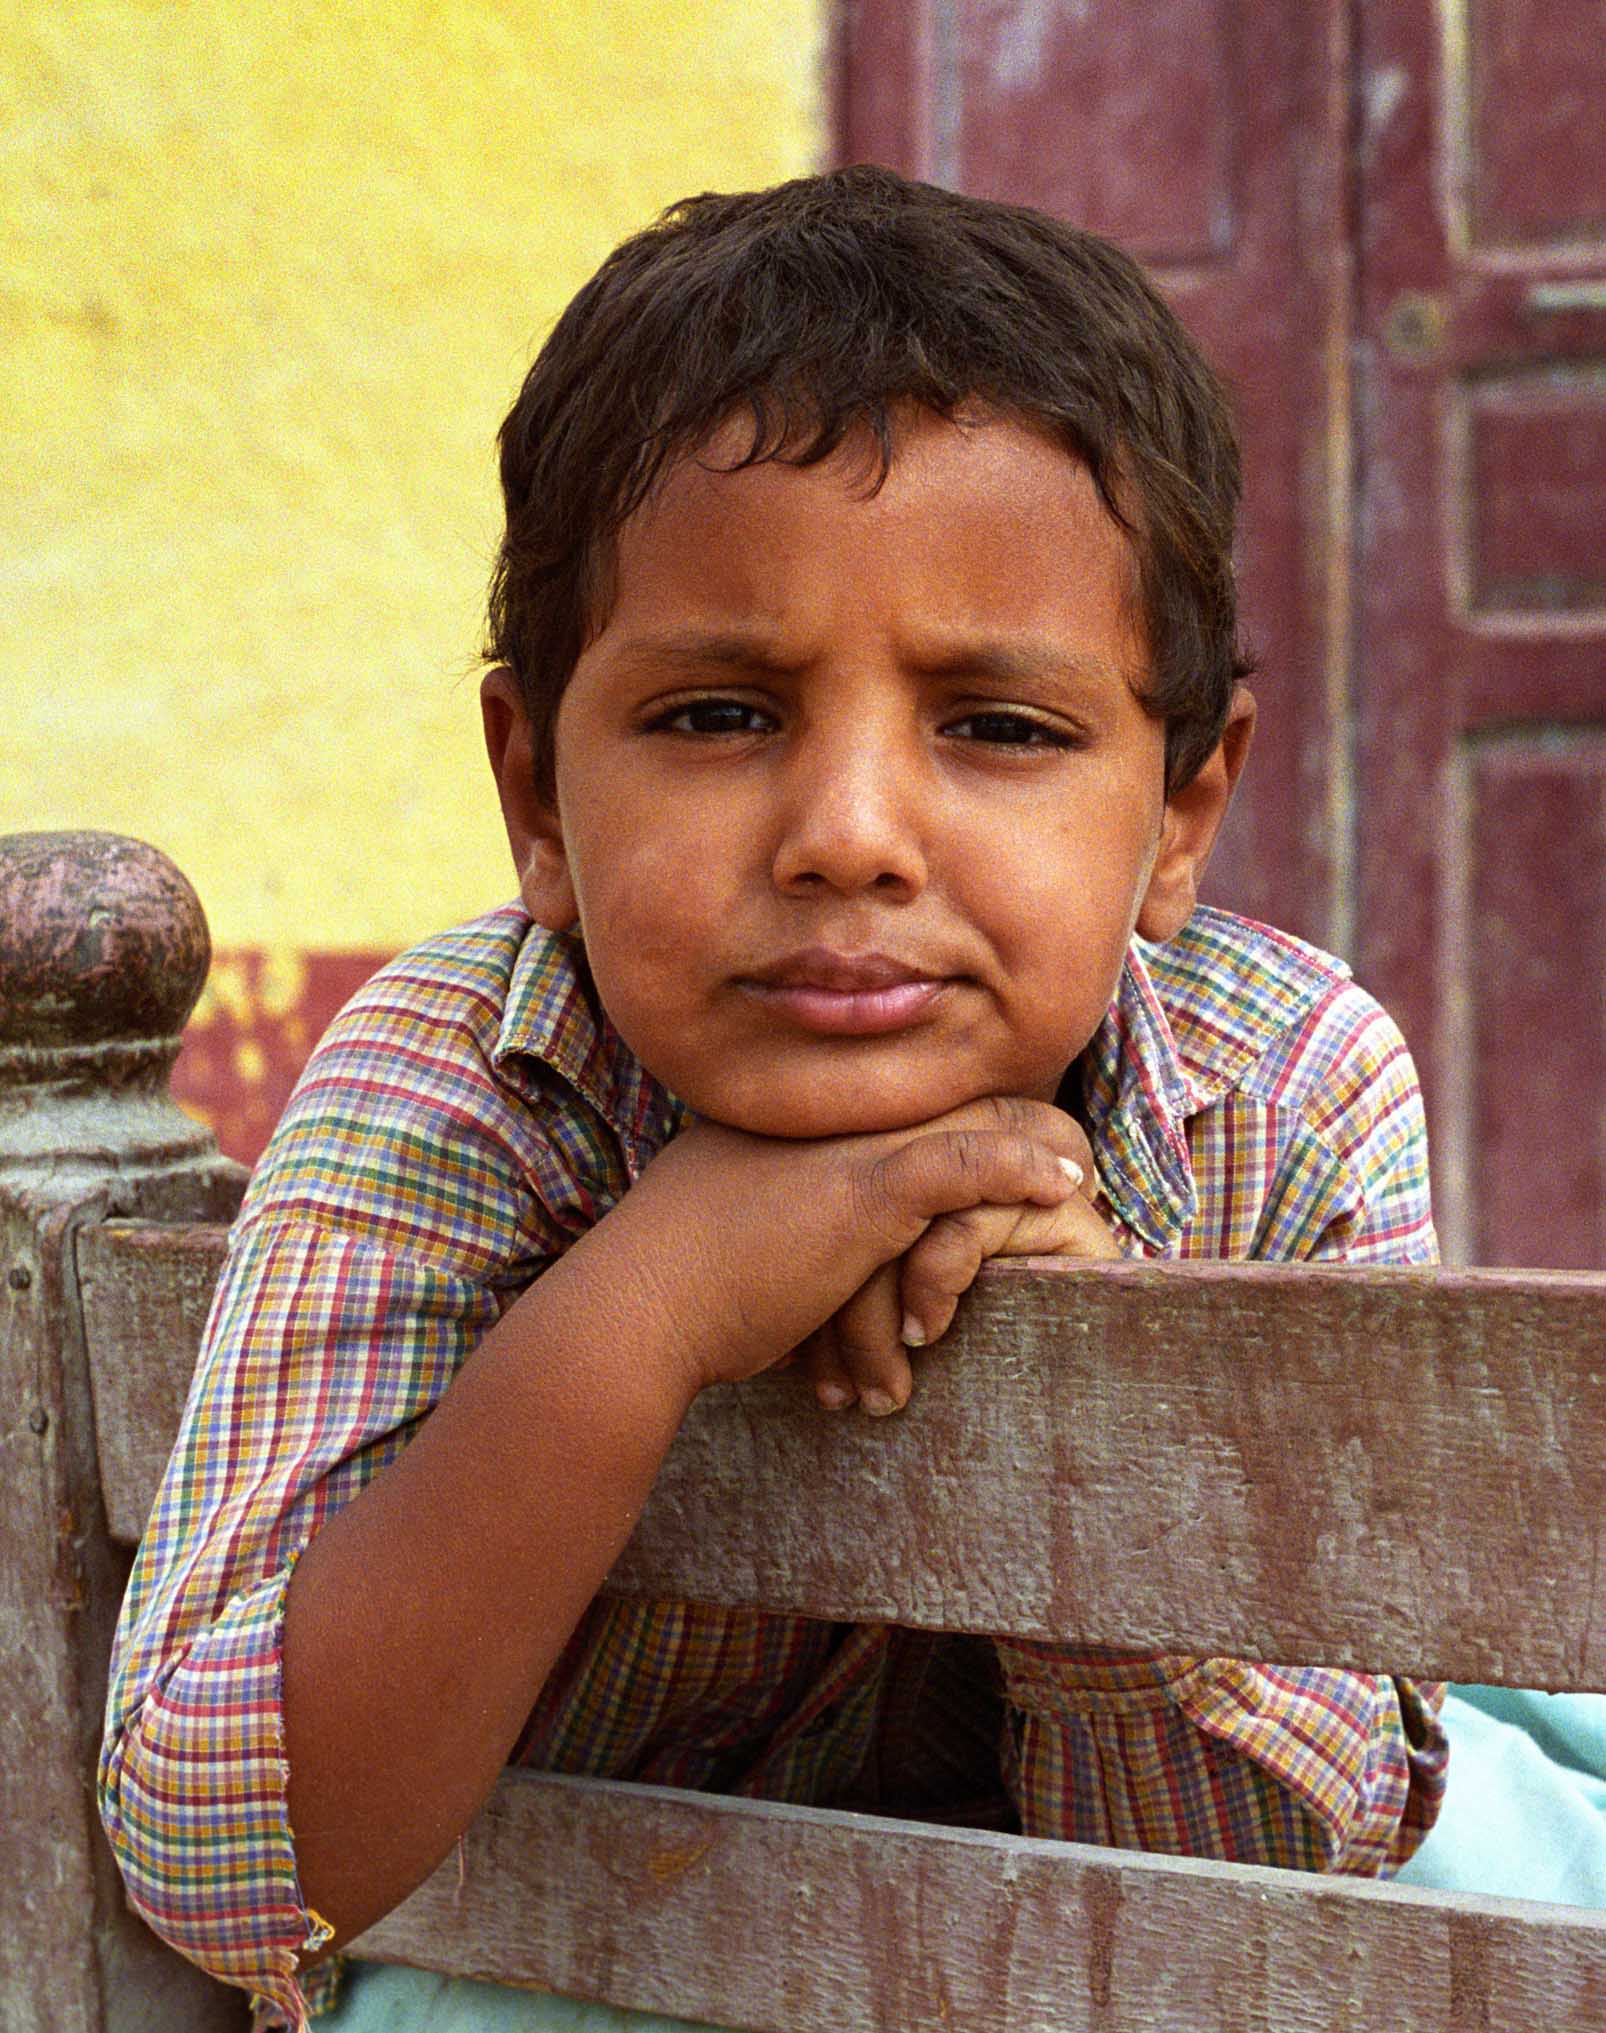 Boy at Nubian village, Egypt